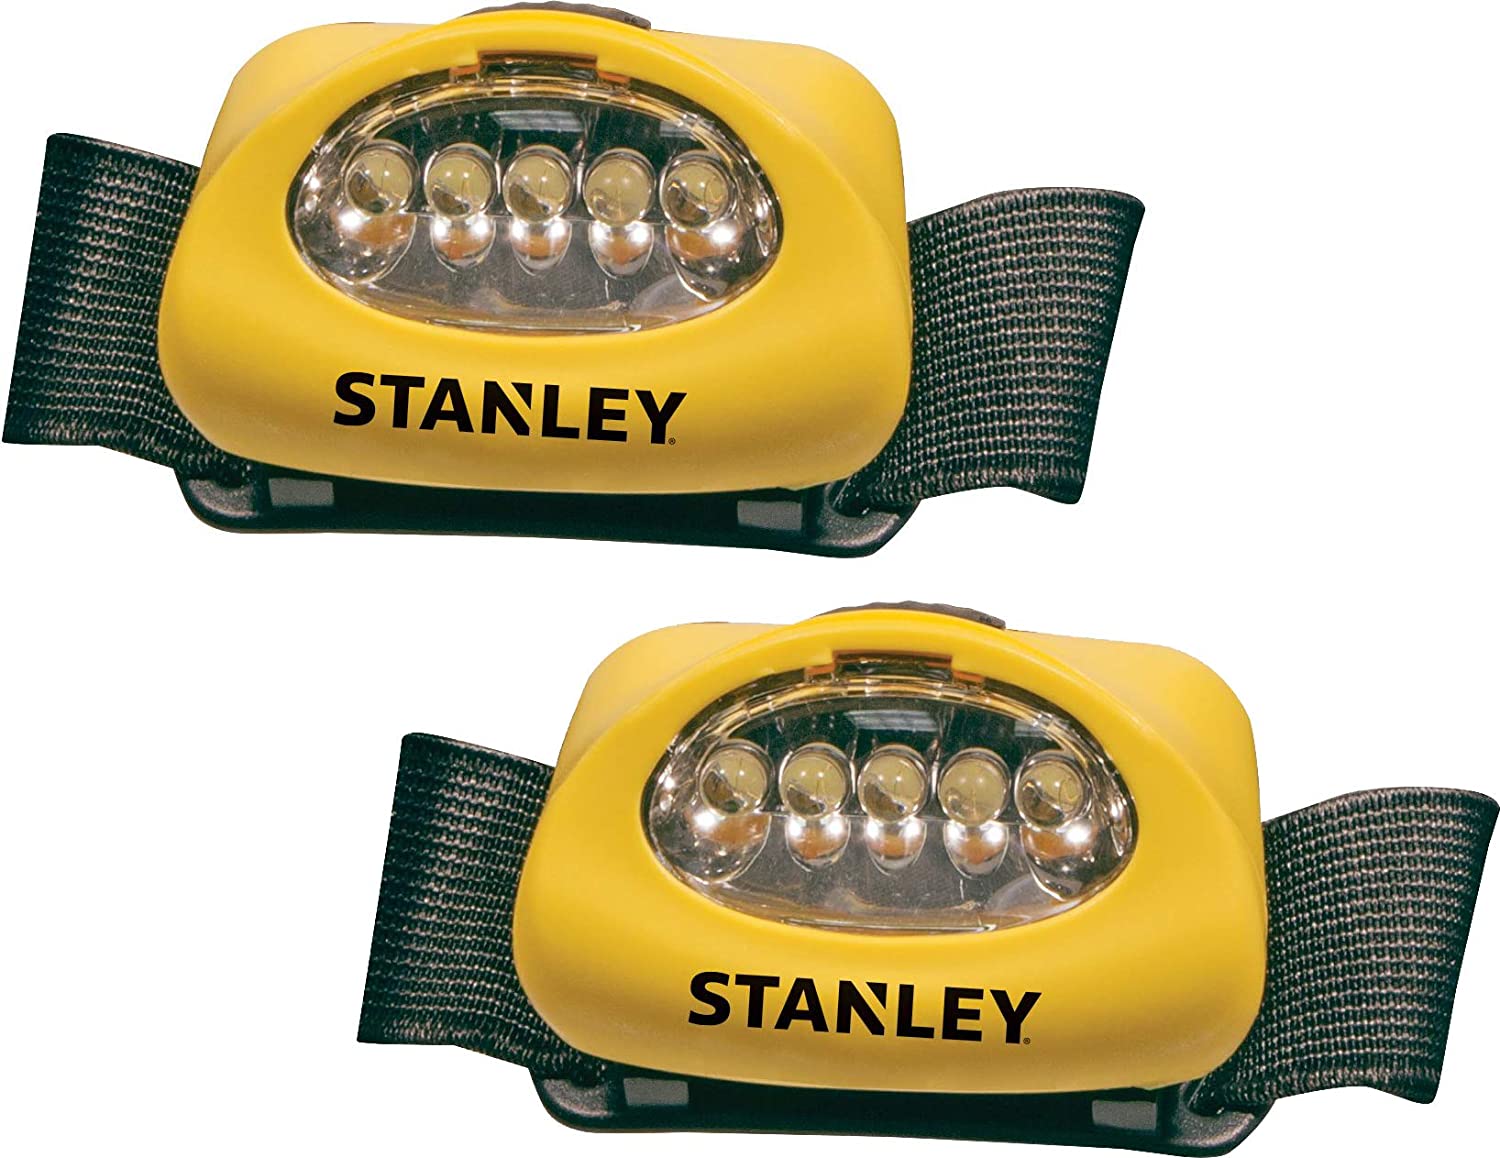 STANLEY HL2PKS Hands Free LED Headlamp Flashlight with Adjustable Headband, Alkaline Battery Powered, 2 Pack $5.71 @ Amazon